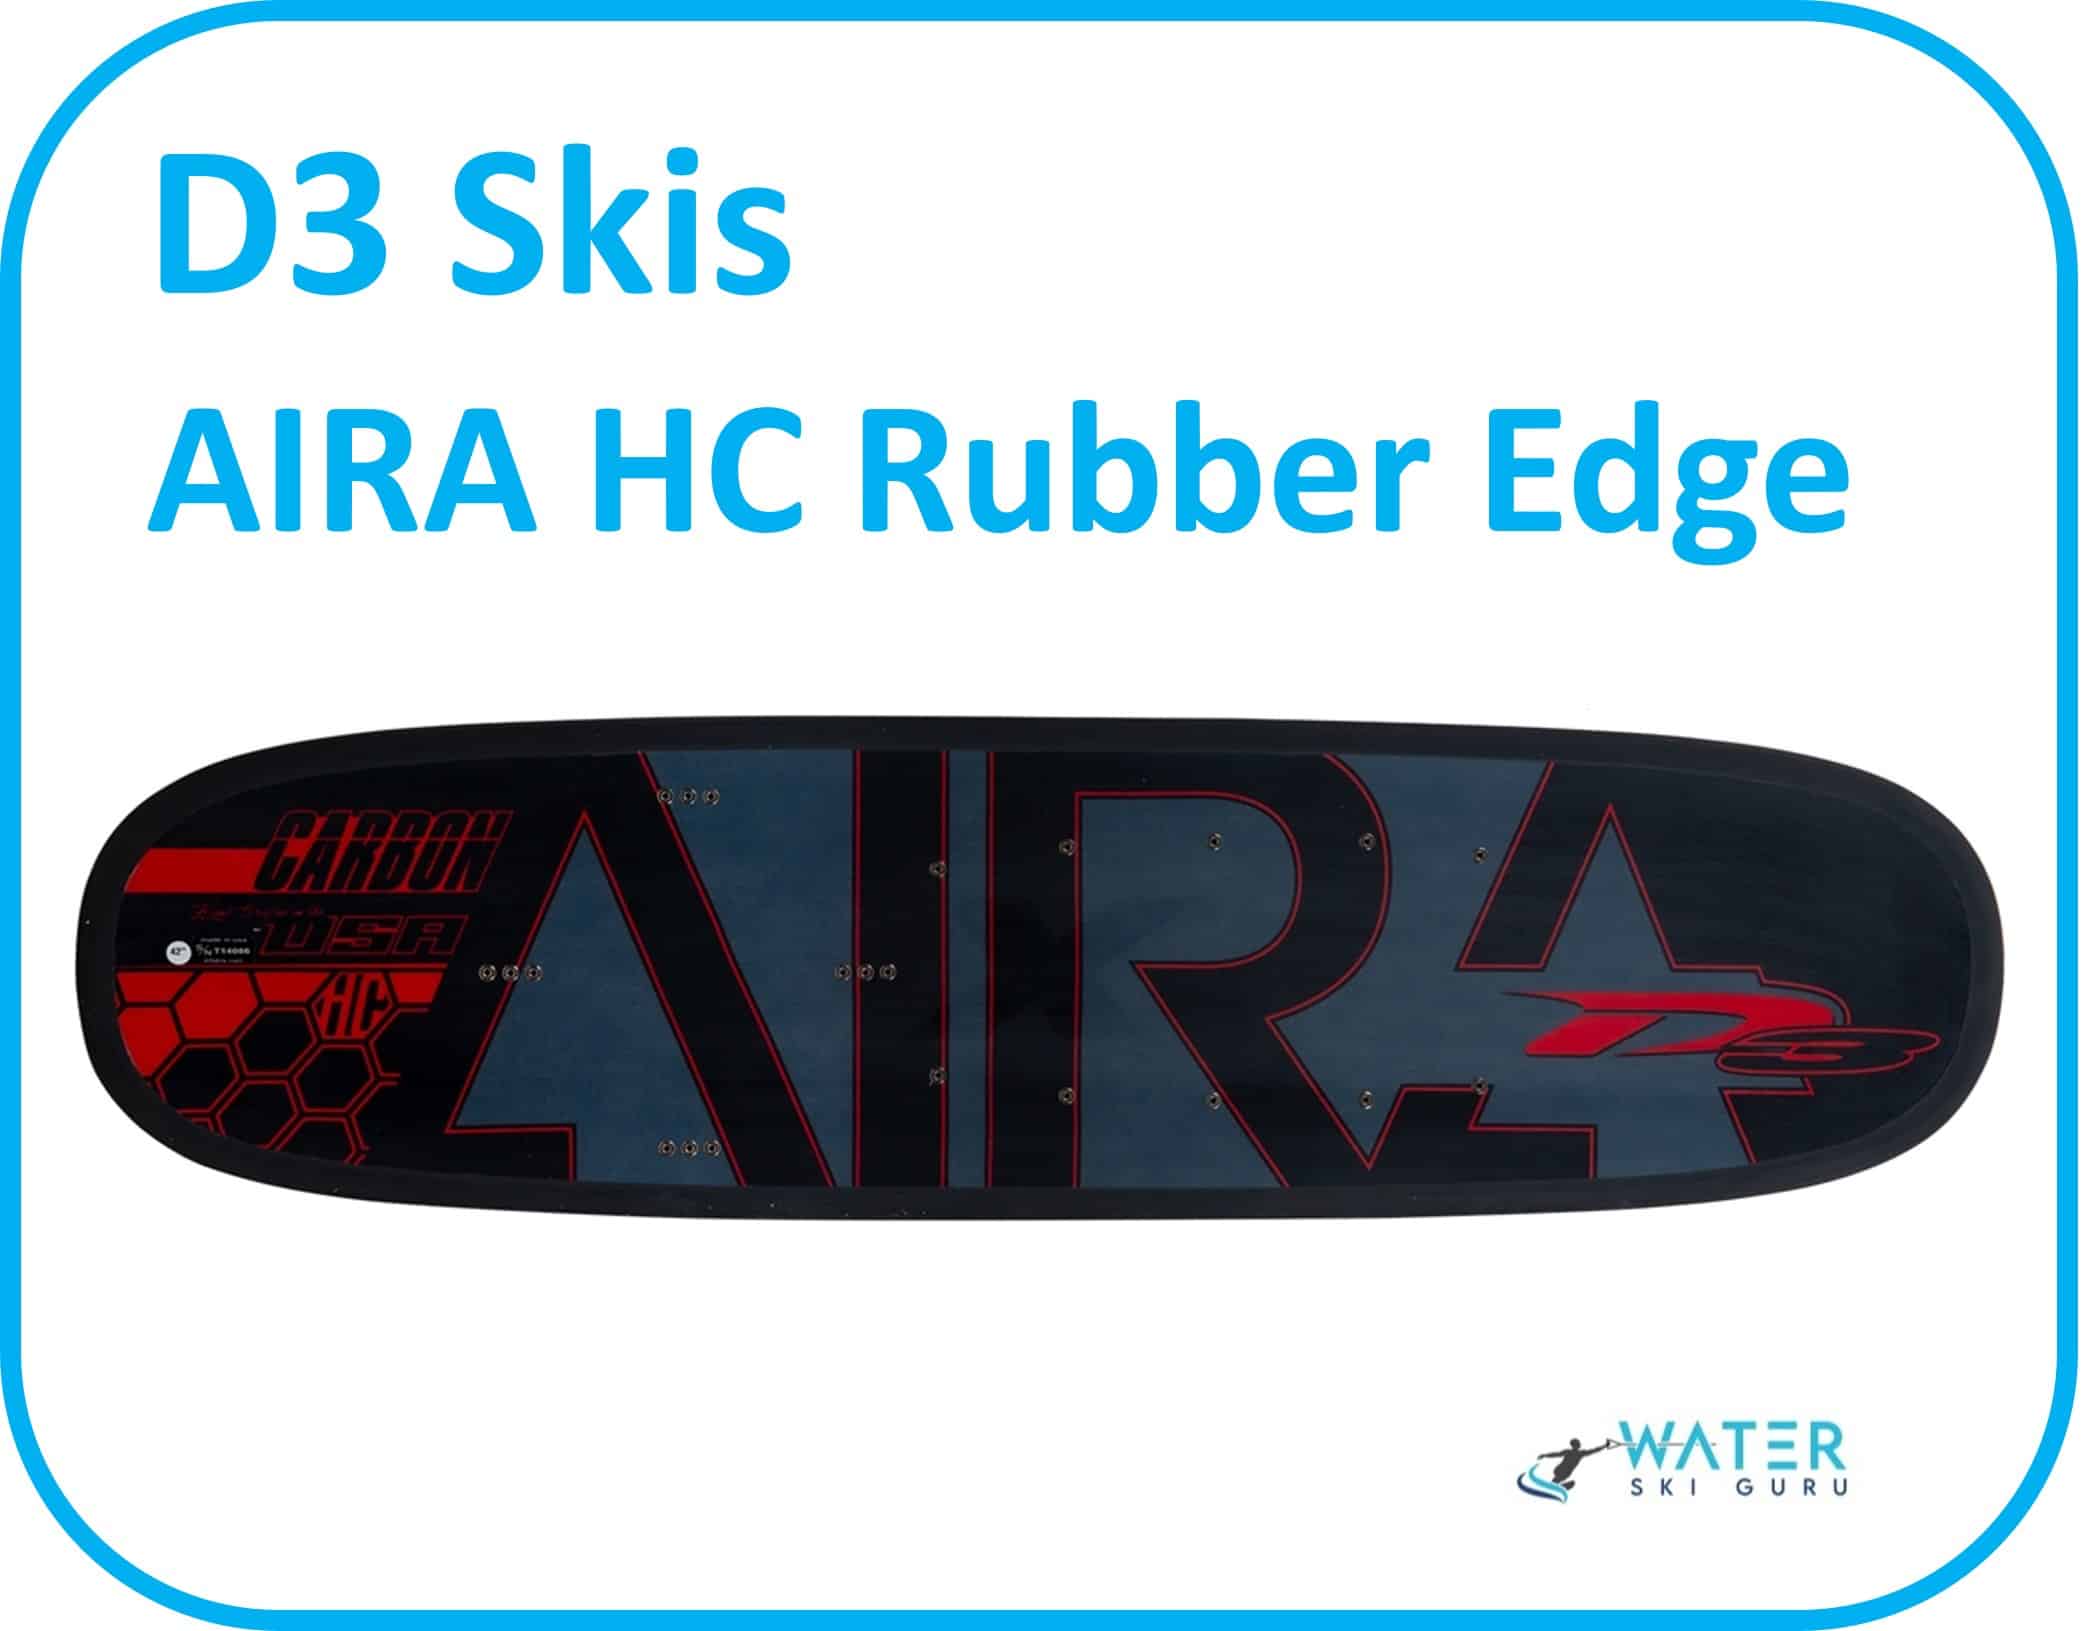 D3 Skis AIRA HC Rubber Edge